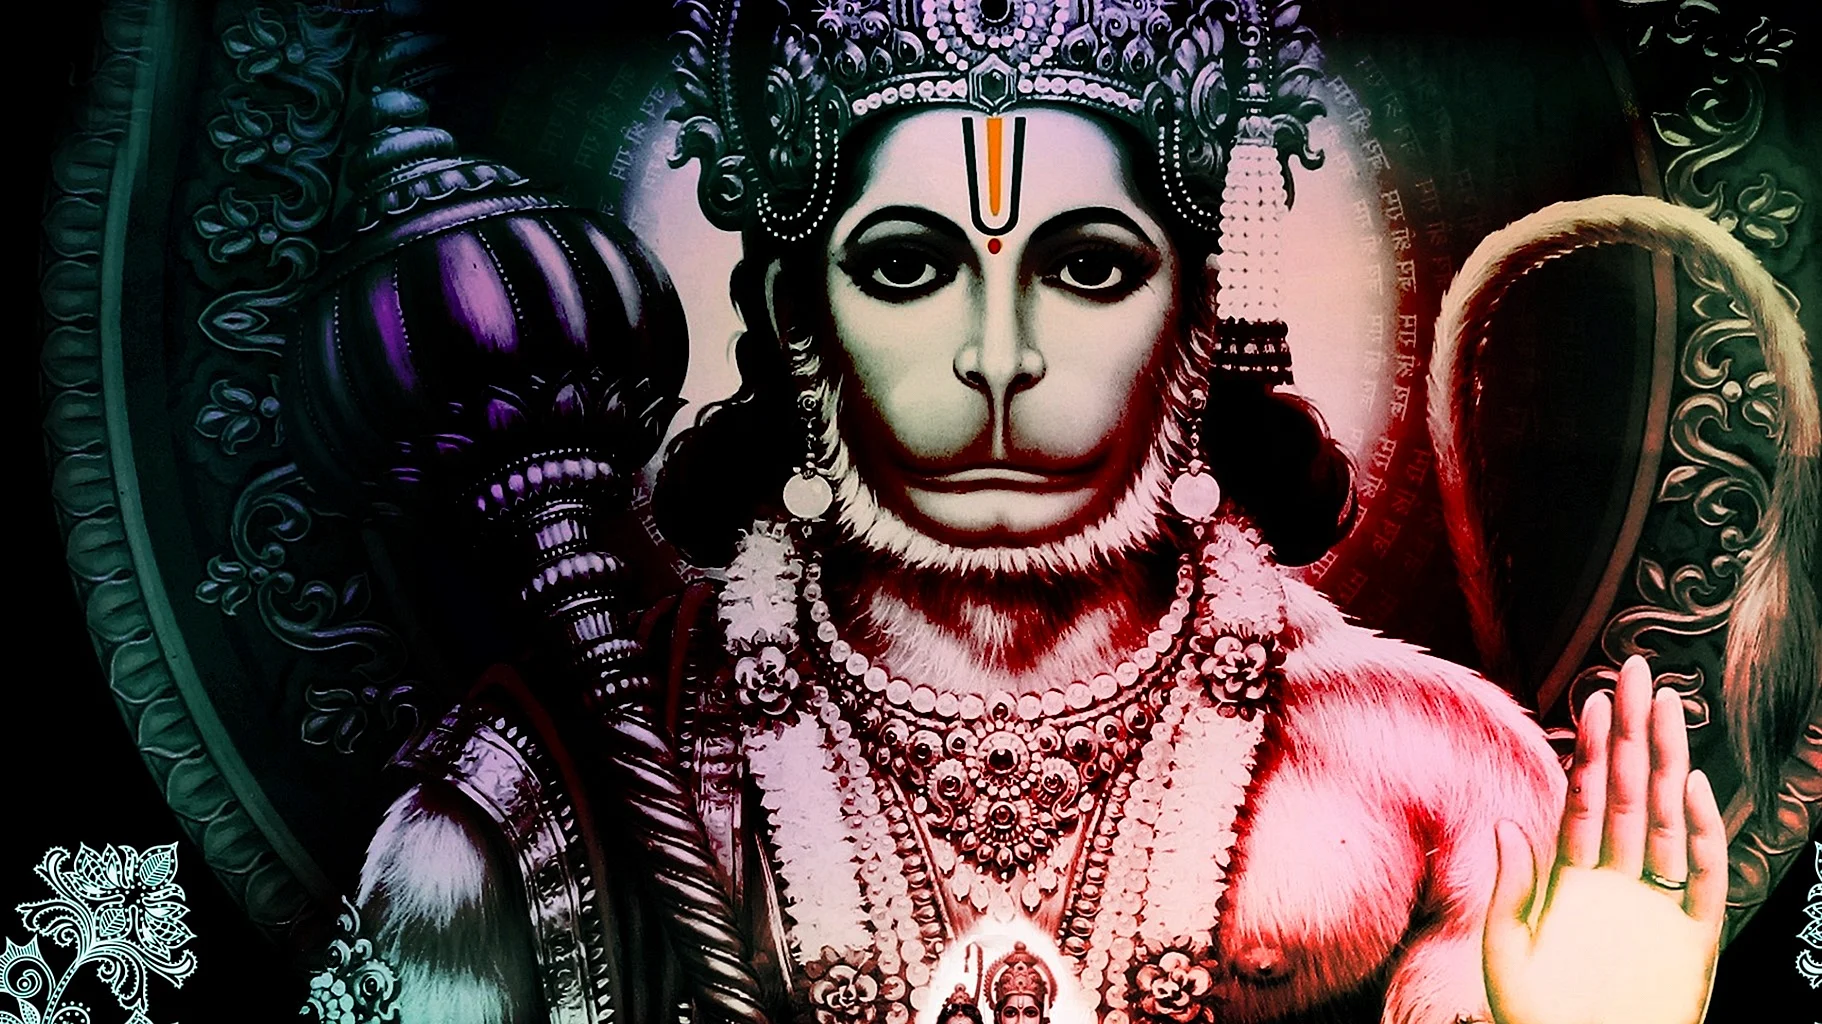 Lord Hanumanji Wallpaper